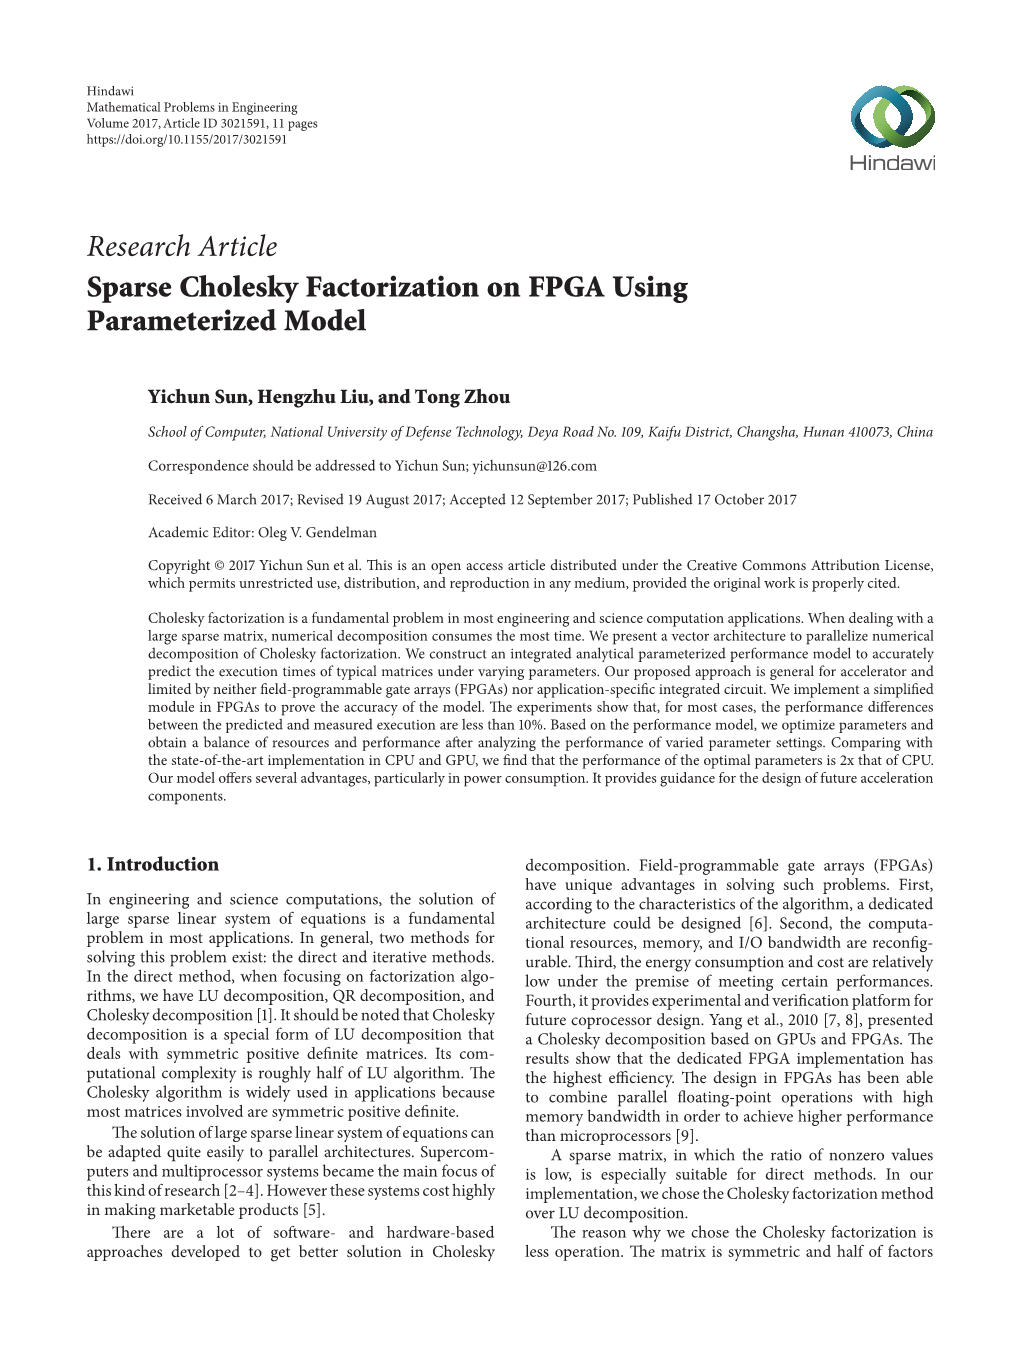 Sparse Cholesky Factorization on FPGA Using Parameterized Model